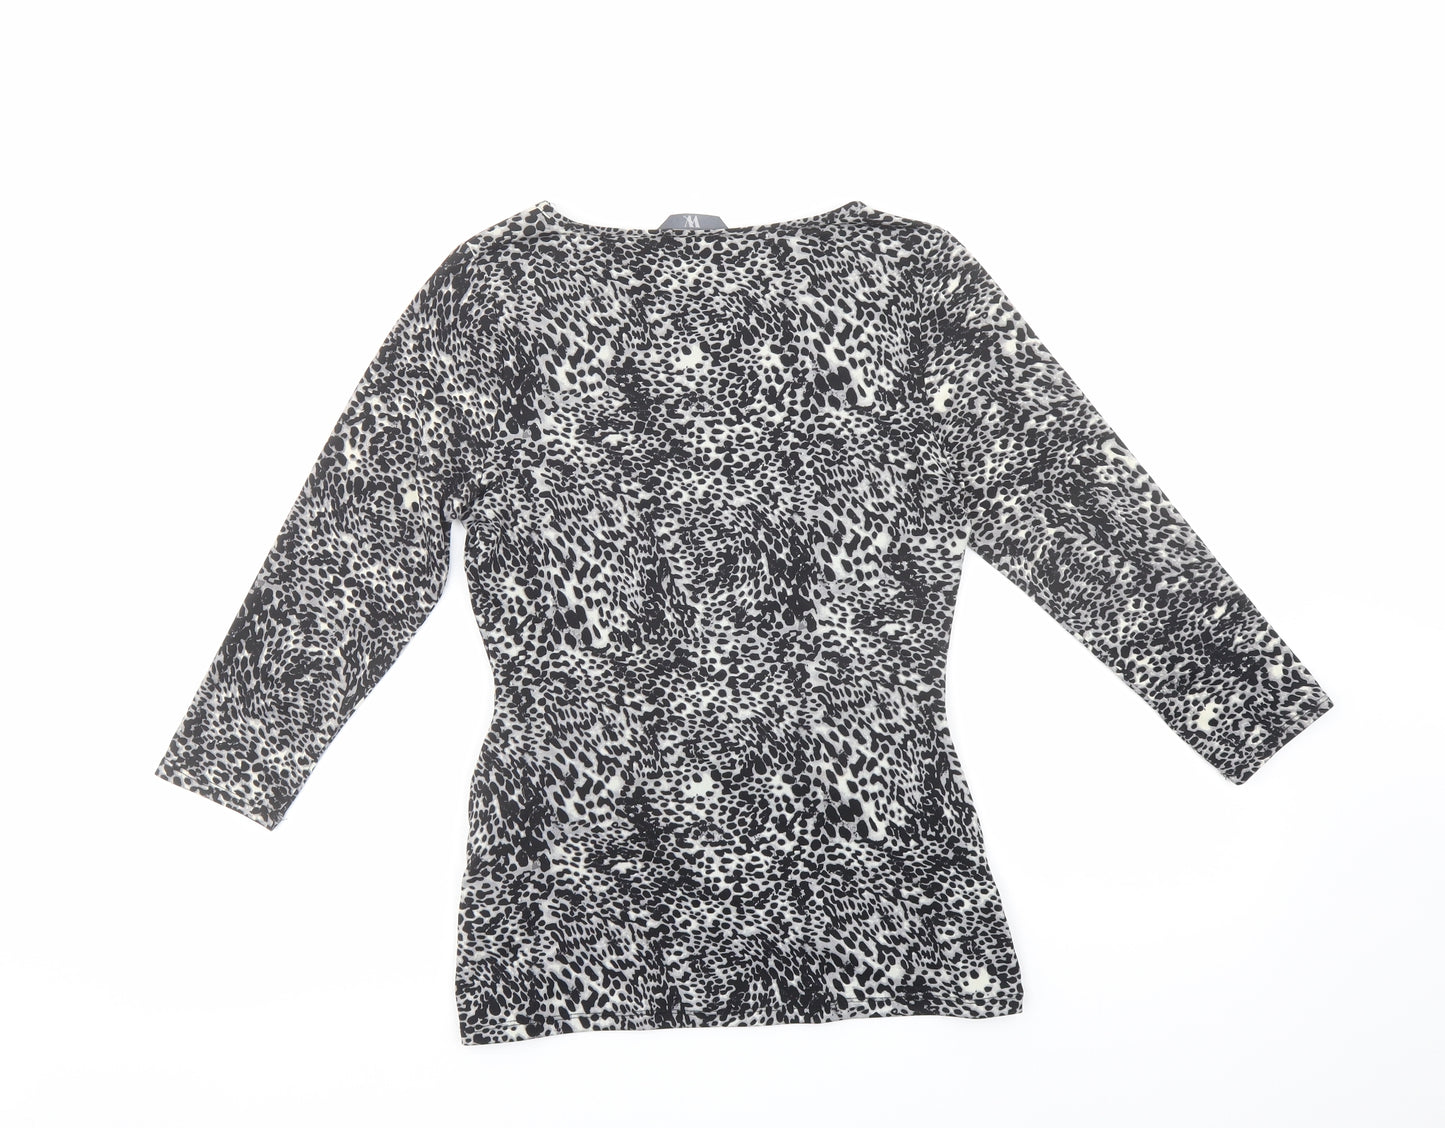 BHS Womens Grey Animal Print Polyester Basic Blouse Size 10 Boat Neck - Embellished Neckline